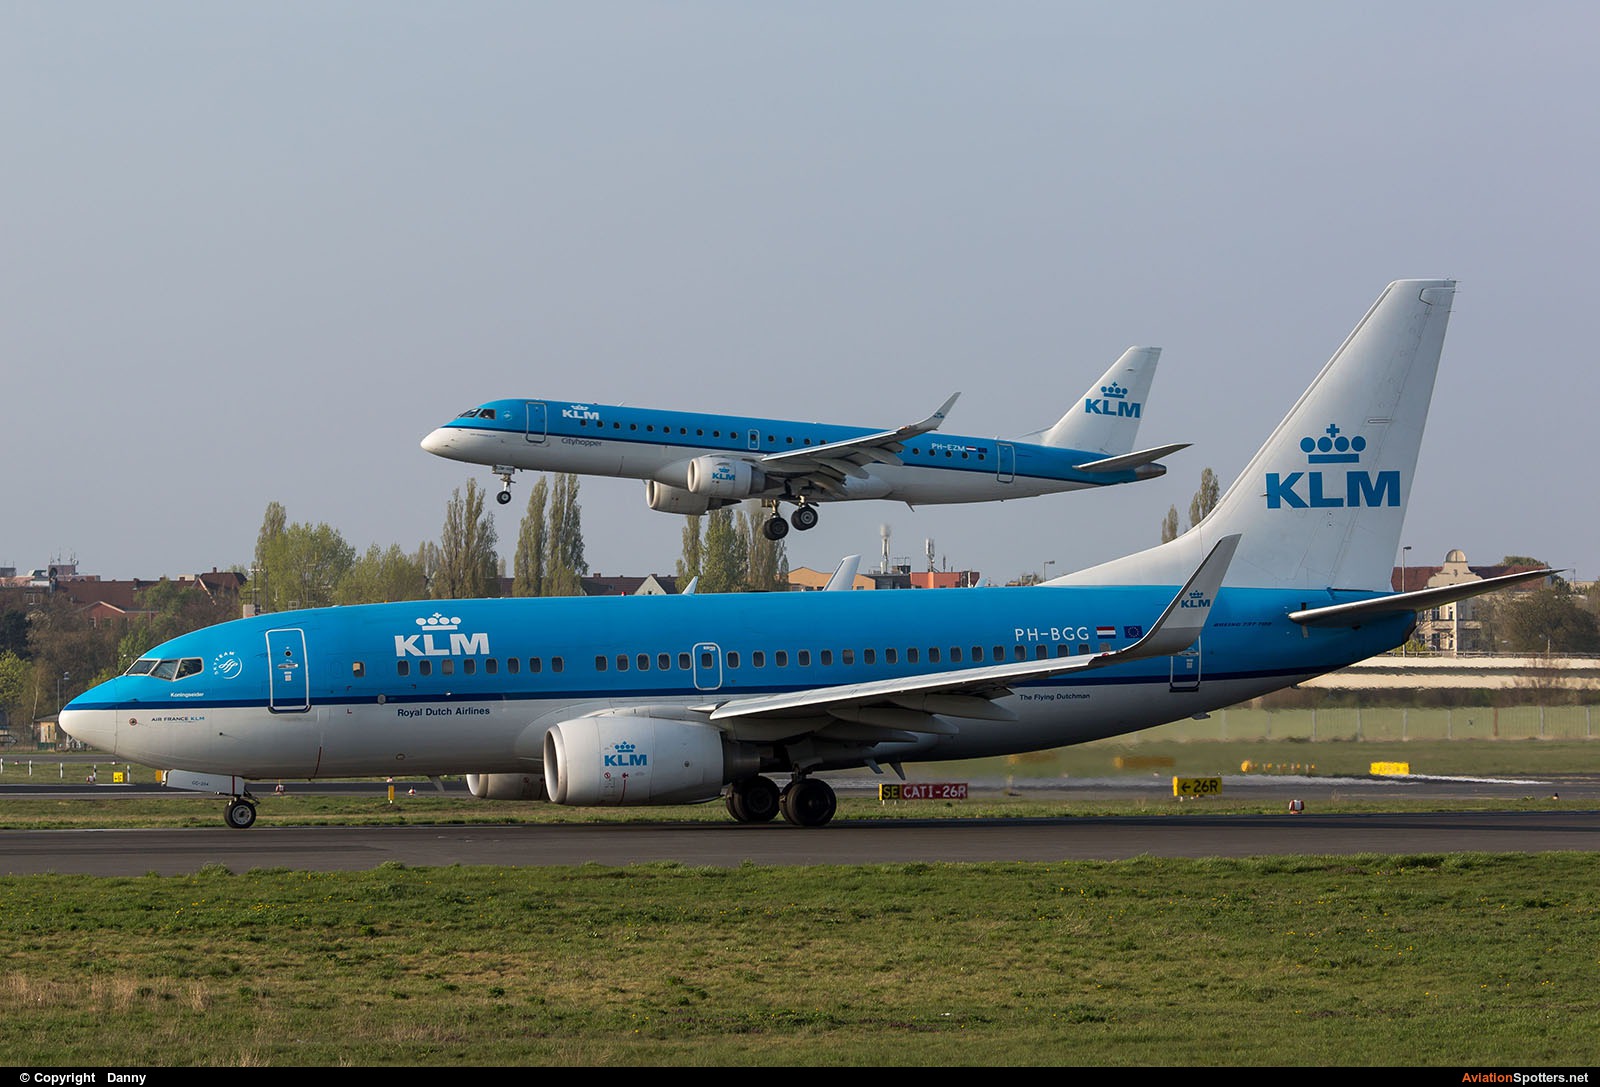 KLM  -  737-700  (PH-BGG) By Danny (Digdis)